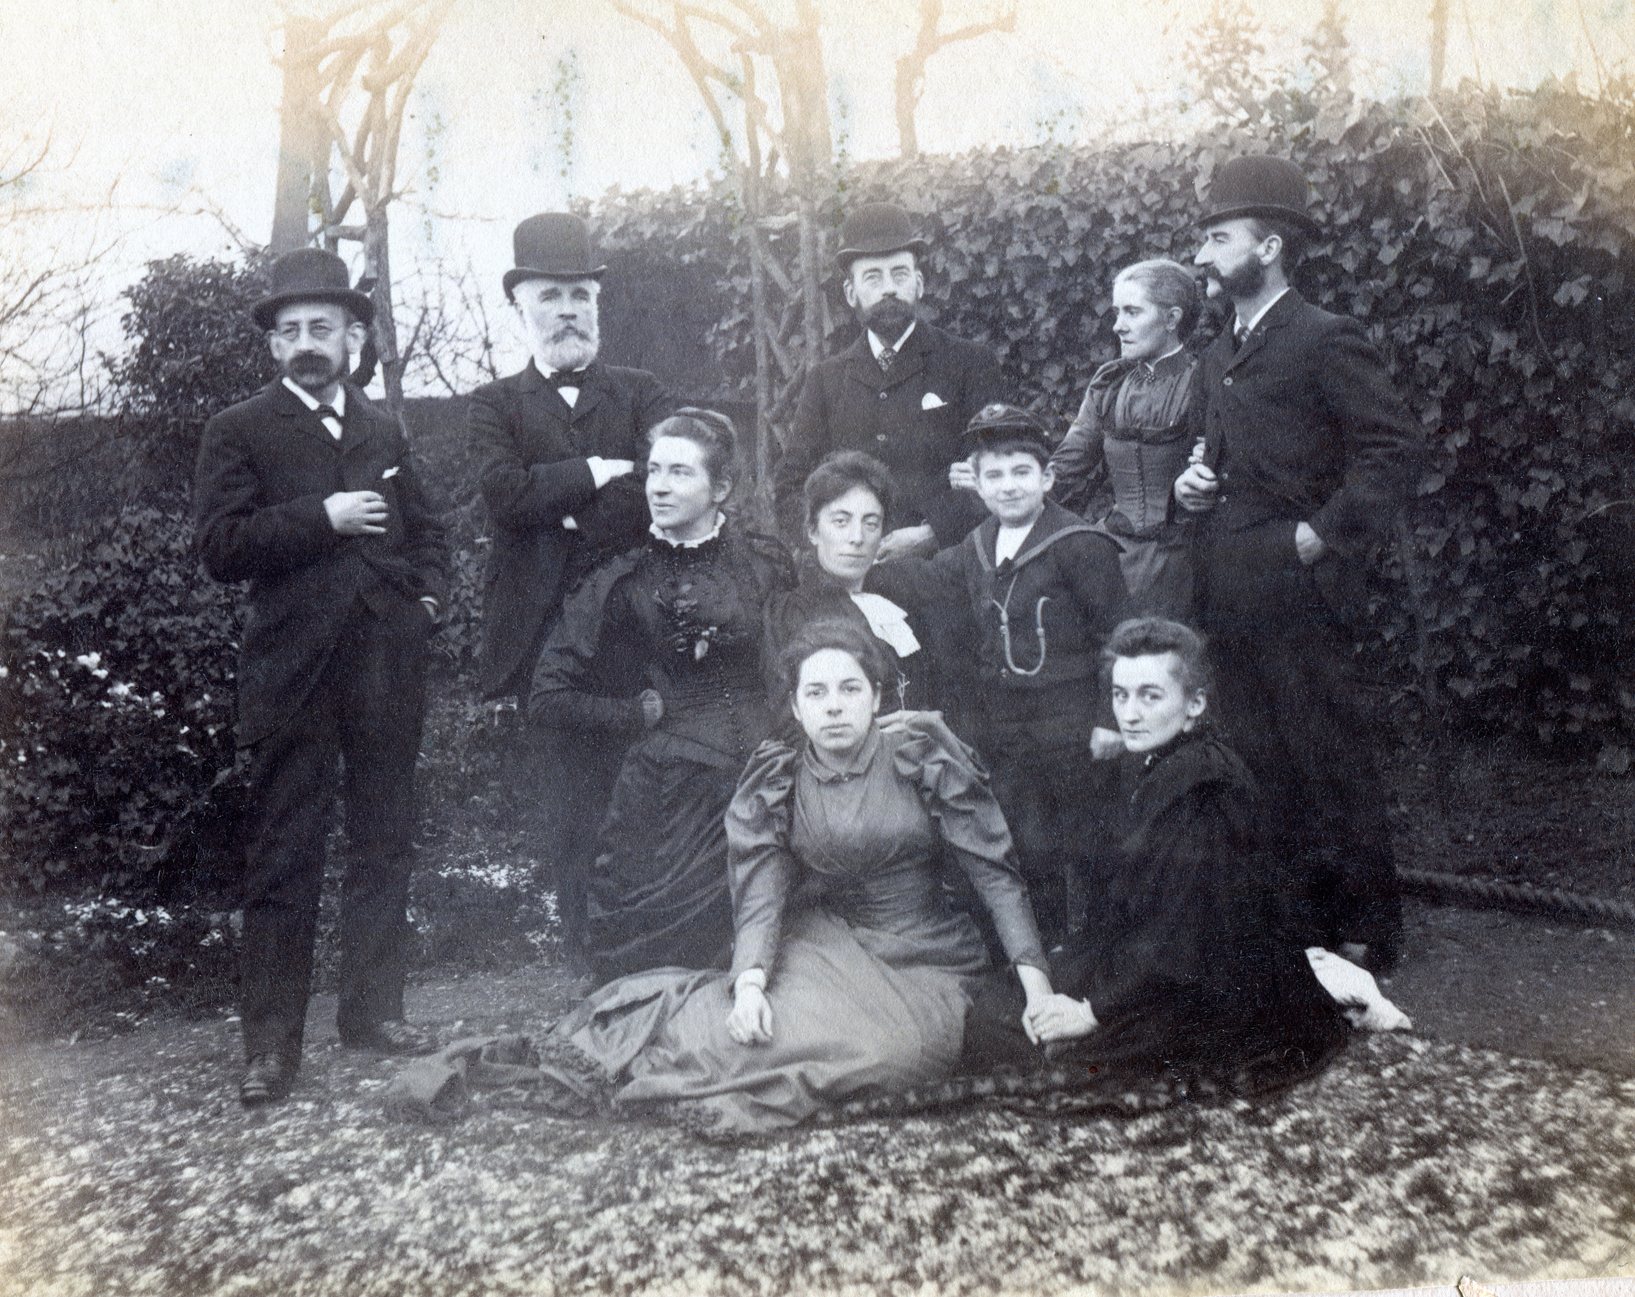 Left to right: (back) Fred Enock, Henry Dell, Robinson Enock, Emily Enock, Edwin Enock, (middle) Jennie Enock, Eleanor Enock, Roy Enock (front) Amy Dell,, Jane Enock - c1891